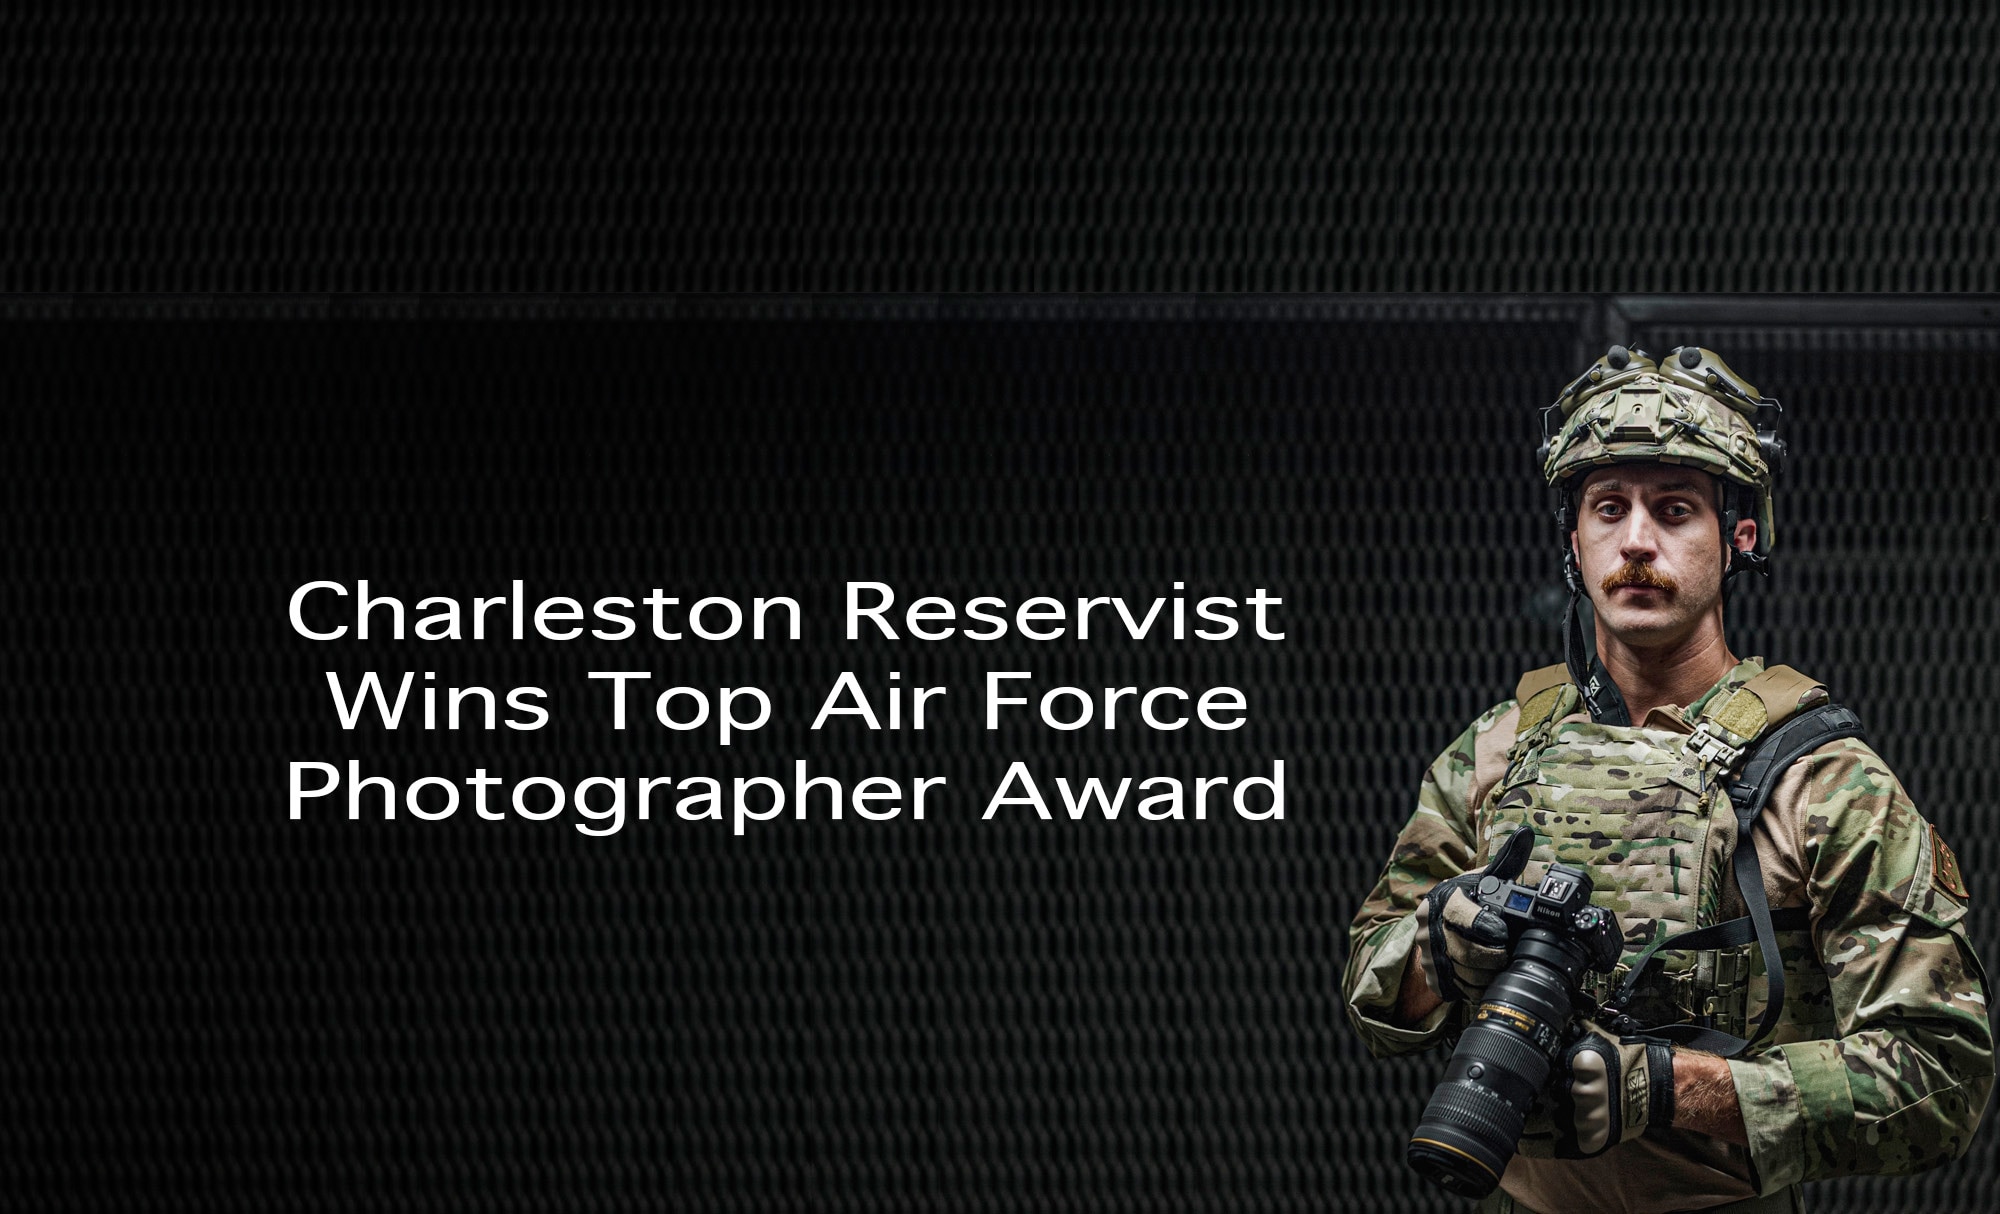 Charleston Reservist wins top Air Force photographer award